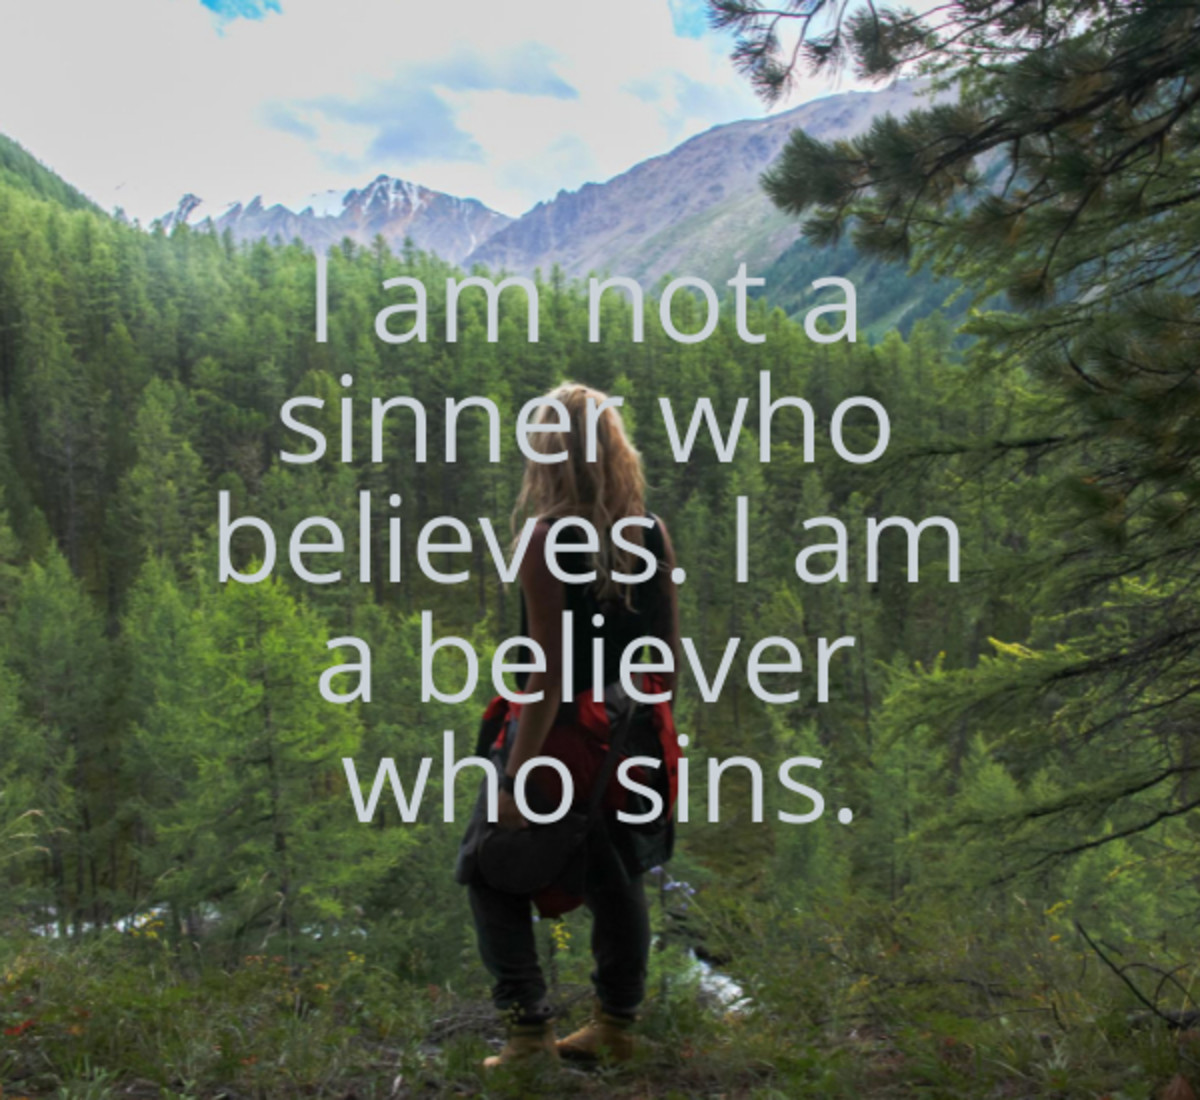 A Believer Who Sins